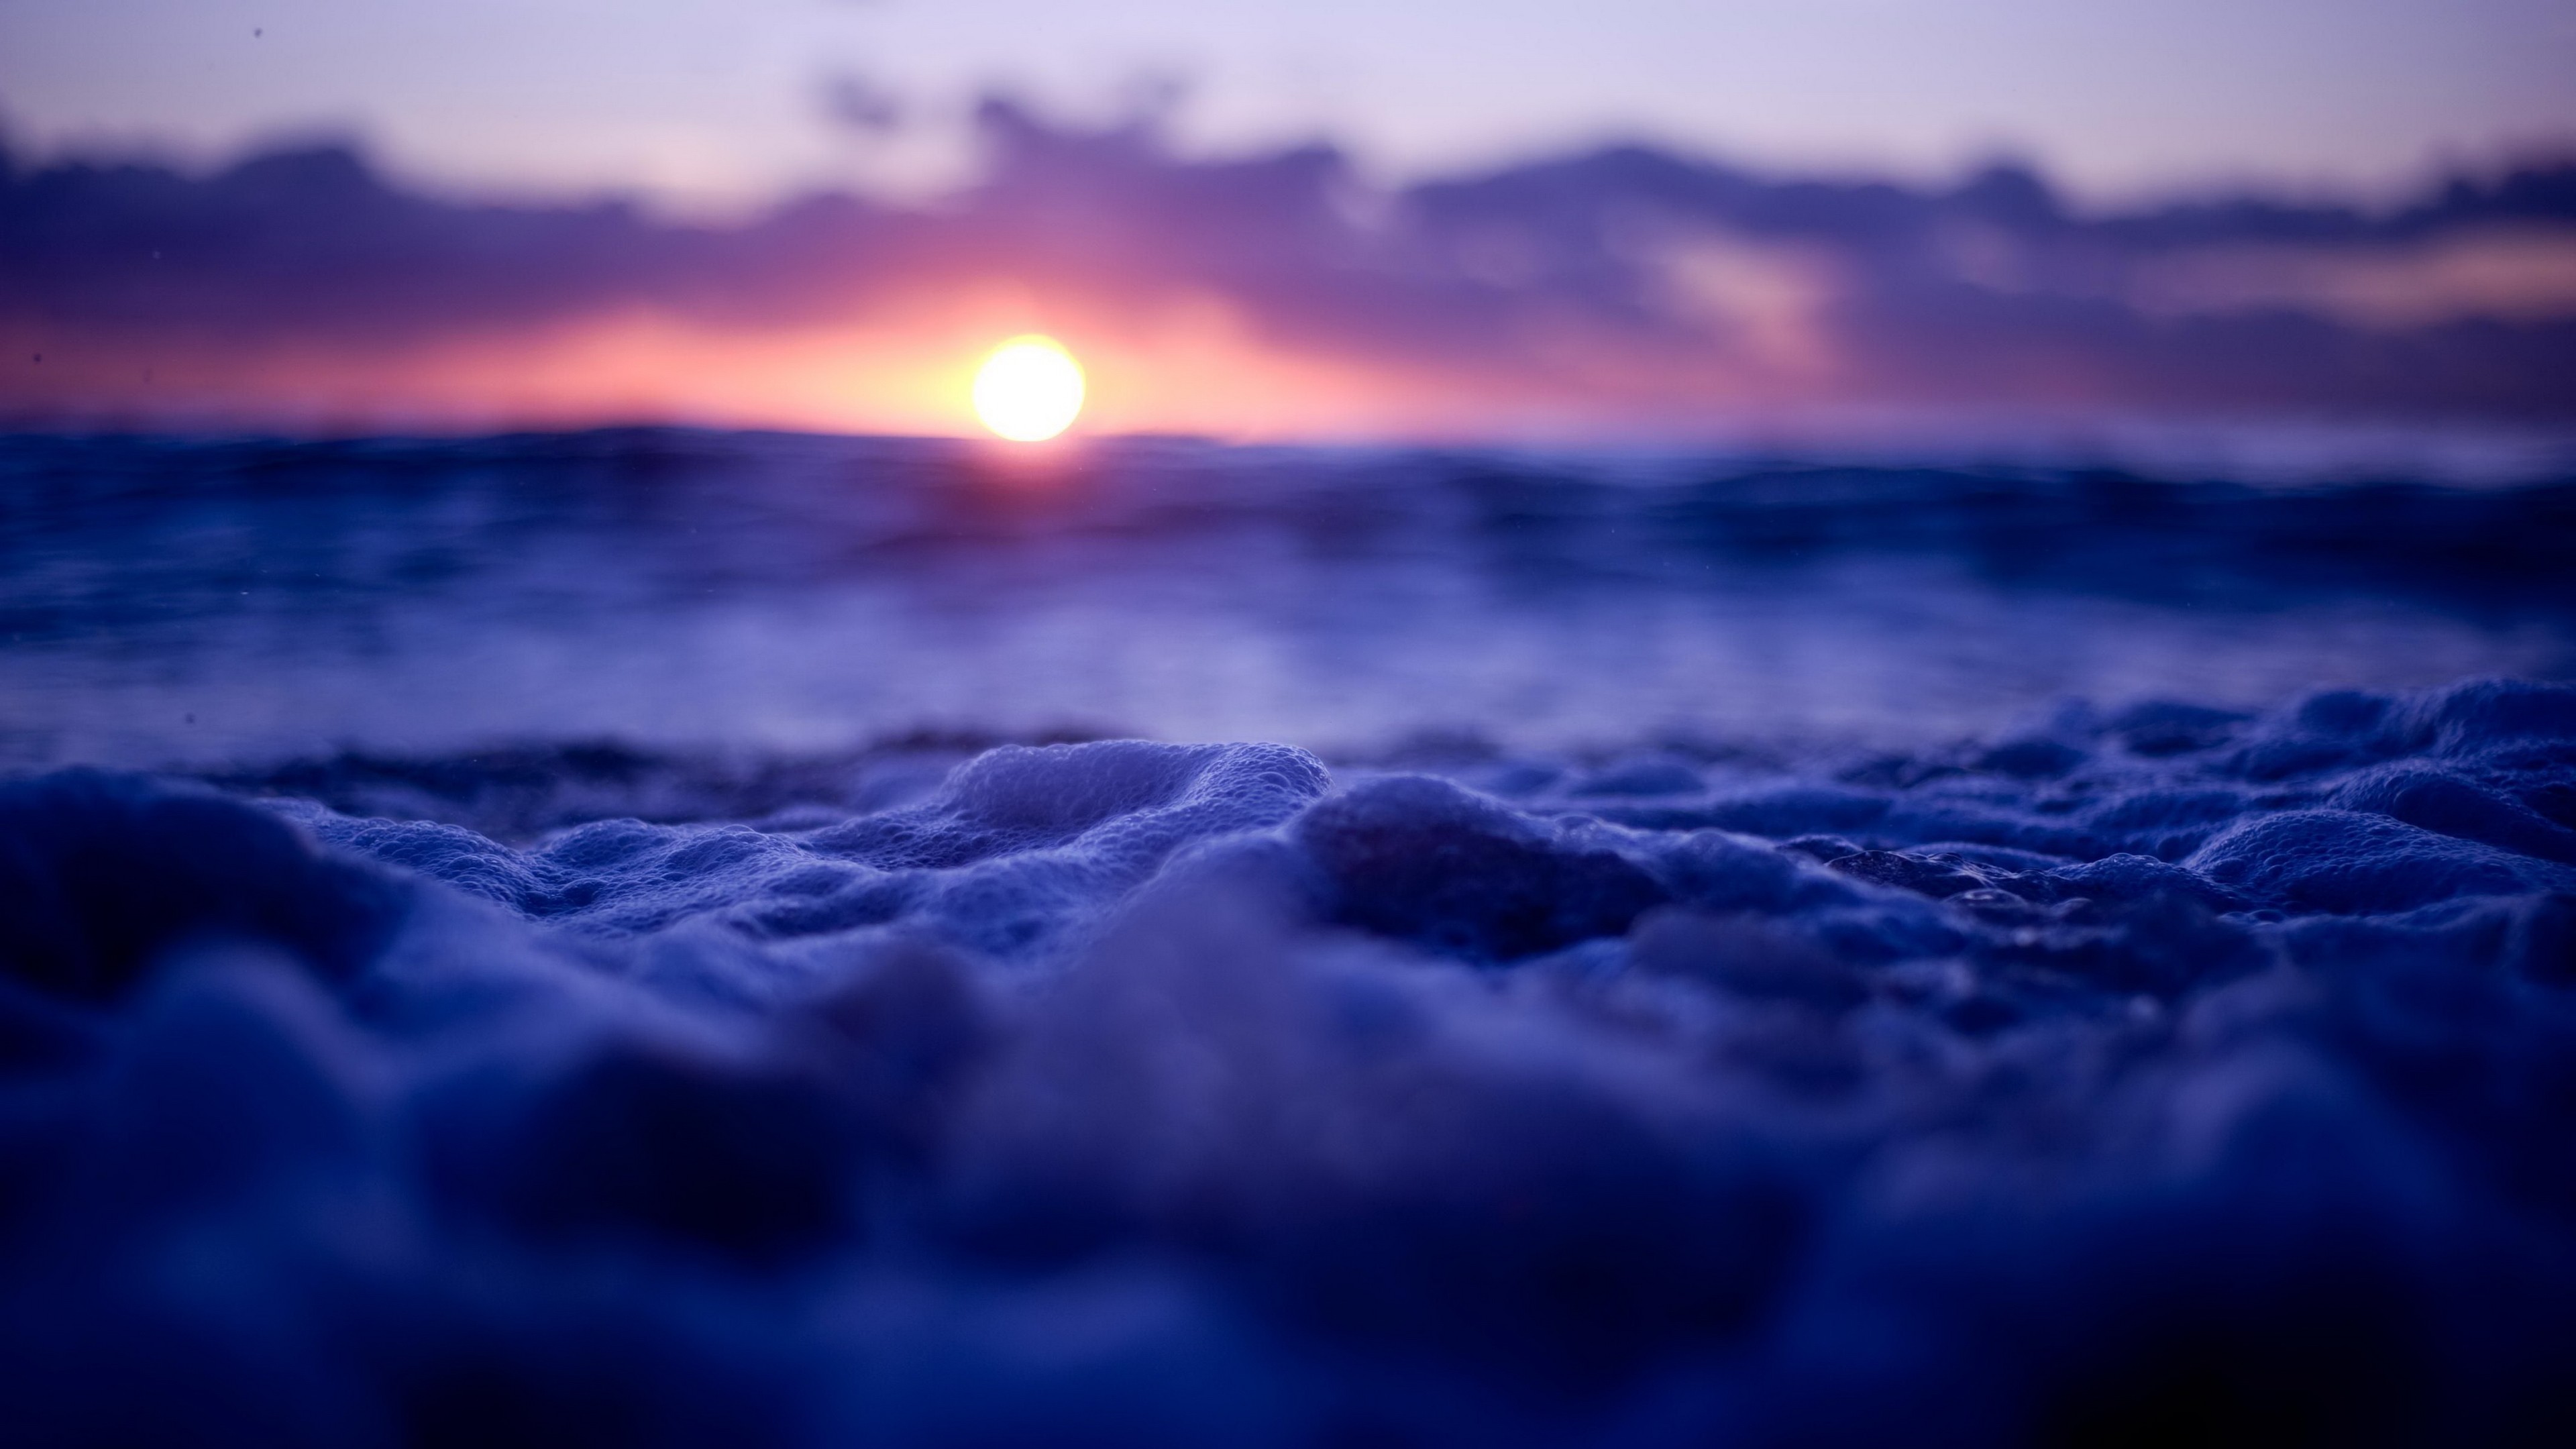 General 3840x2160 sunset water sea waves bubbles tilt shift nature landscape clouds depth of field